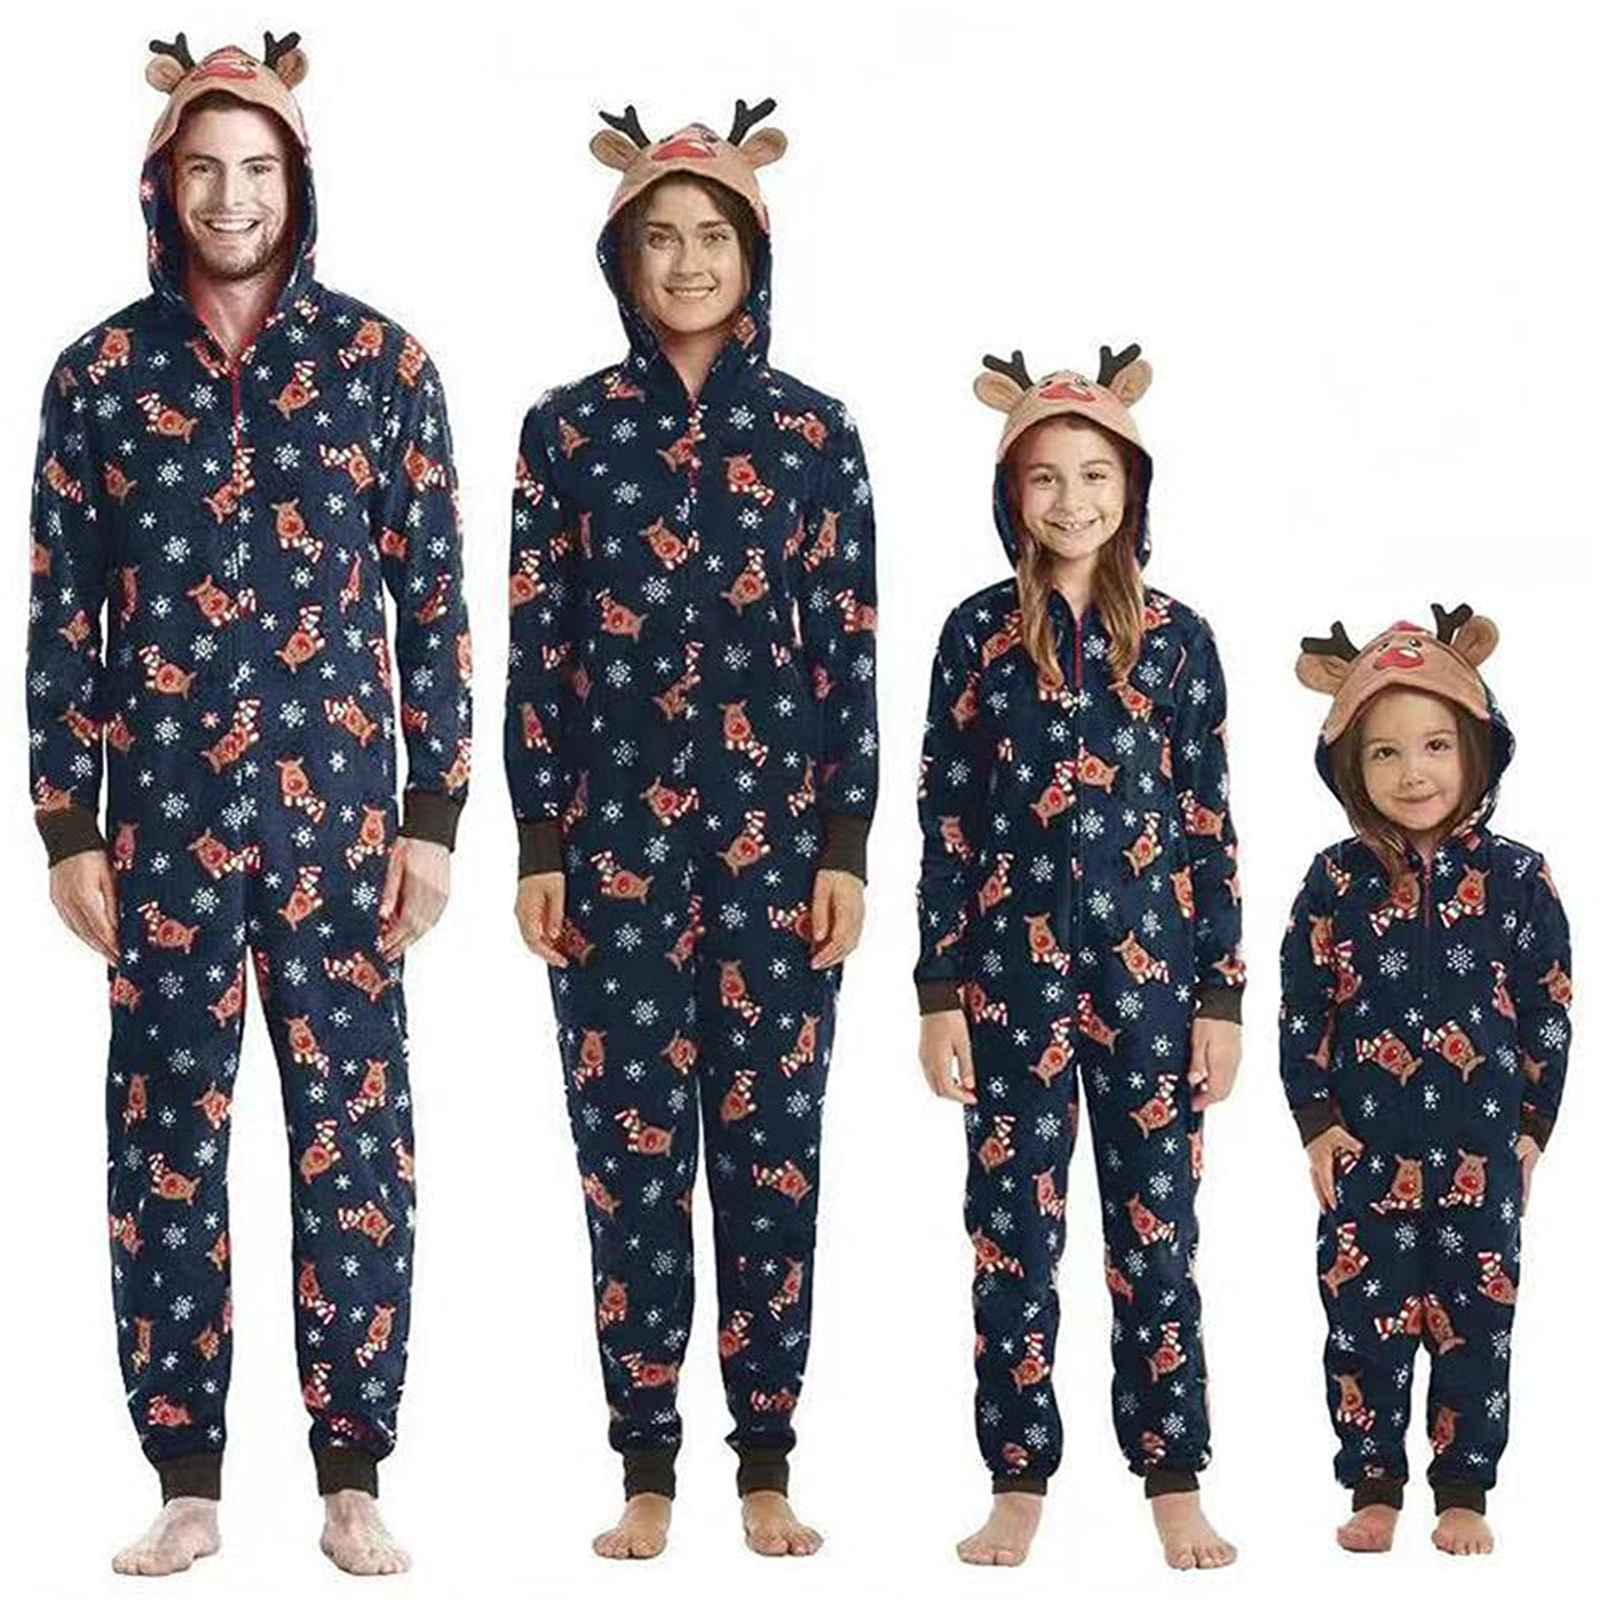 Shuttle tree Family Christmas Matching Pajamas Cartoon Deer Hooded Onesies Xmas One-Pieces Sleepwear Adult Kids Baby - image 1 of 7